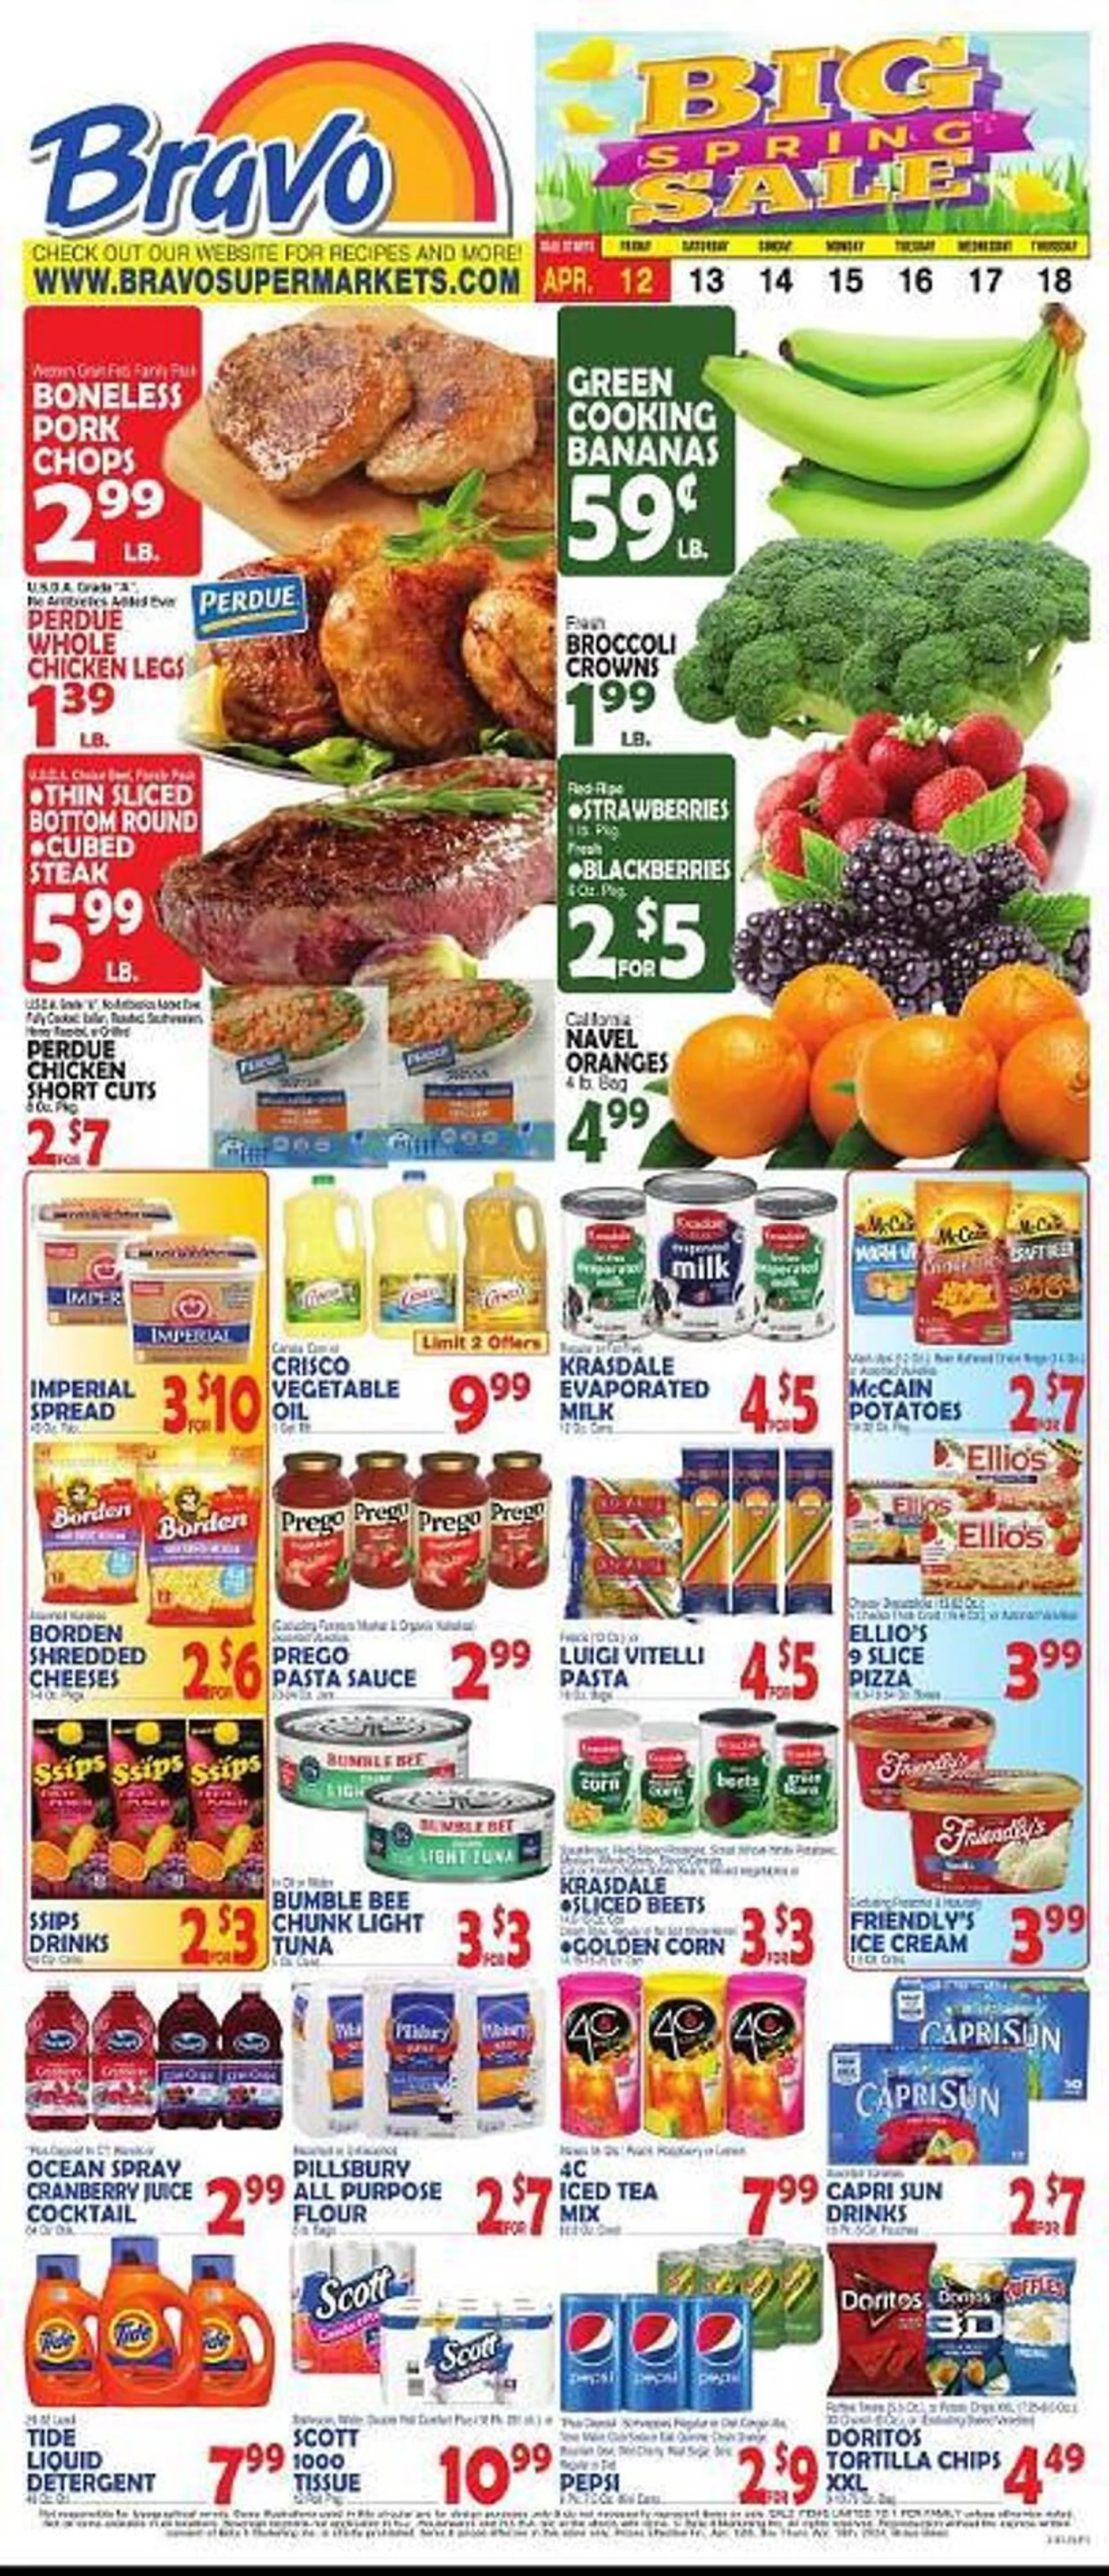 Bravo Supermarkets Weekly Ad - 1